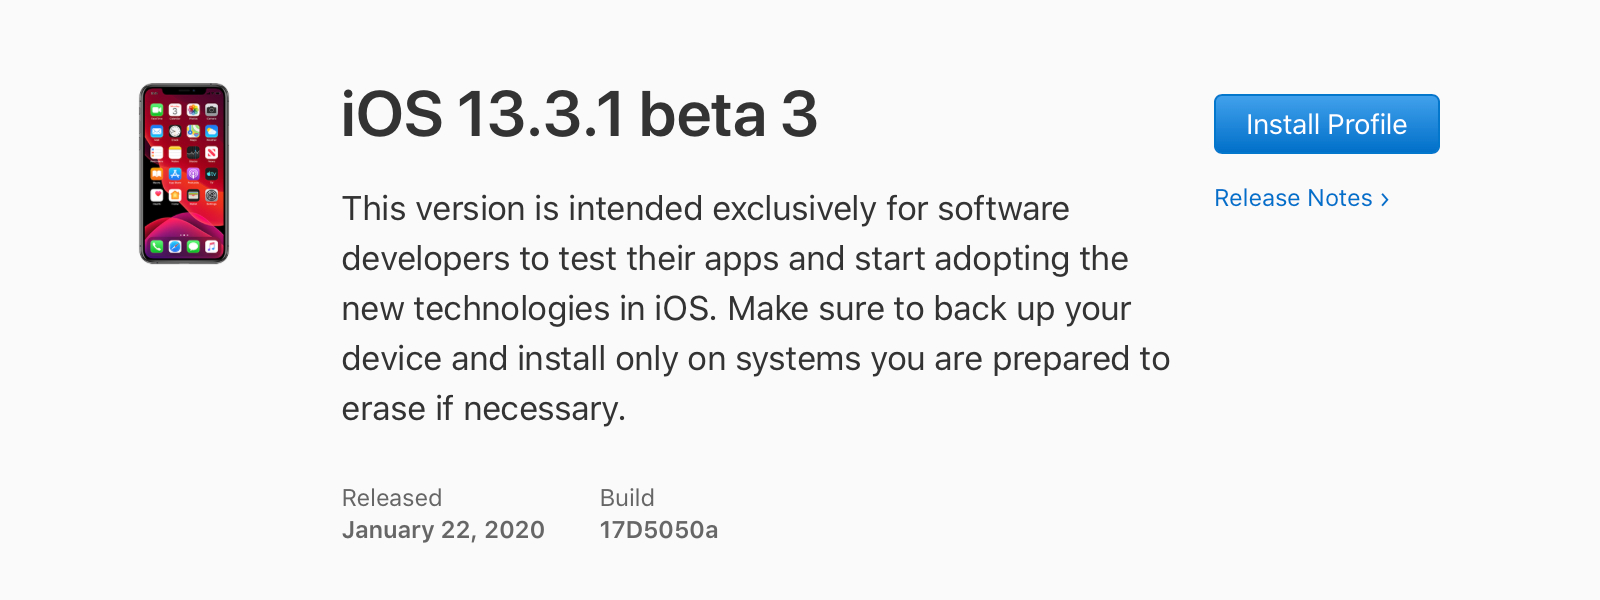 iOS 13.3.1 beta 3, iPadOS 13.3.1 beta 3, tvOS 13.3.1 beta 3, y watchOS 6.1.2 beta 3